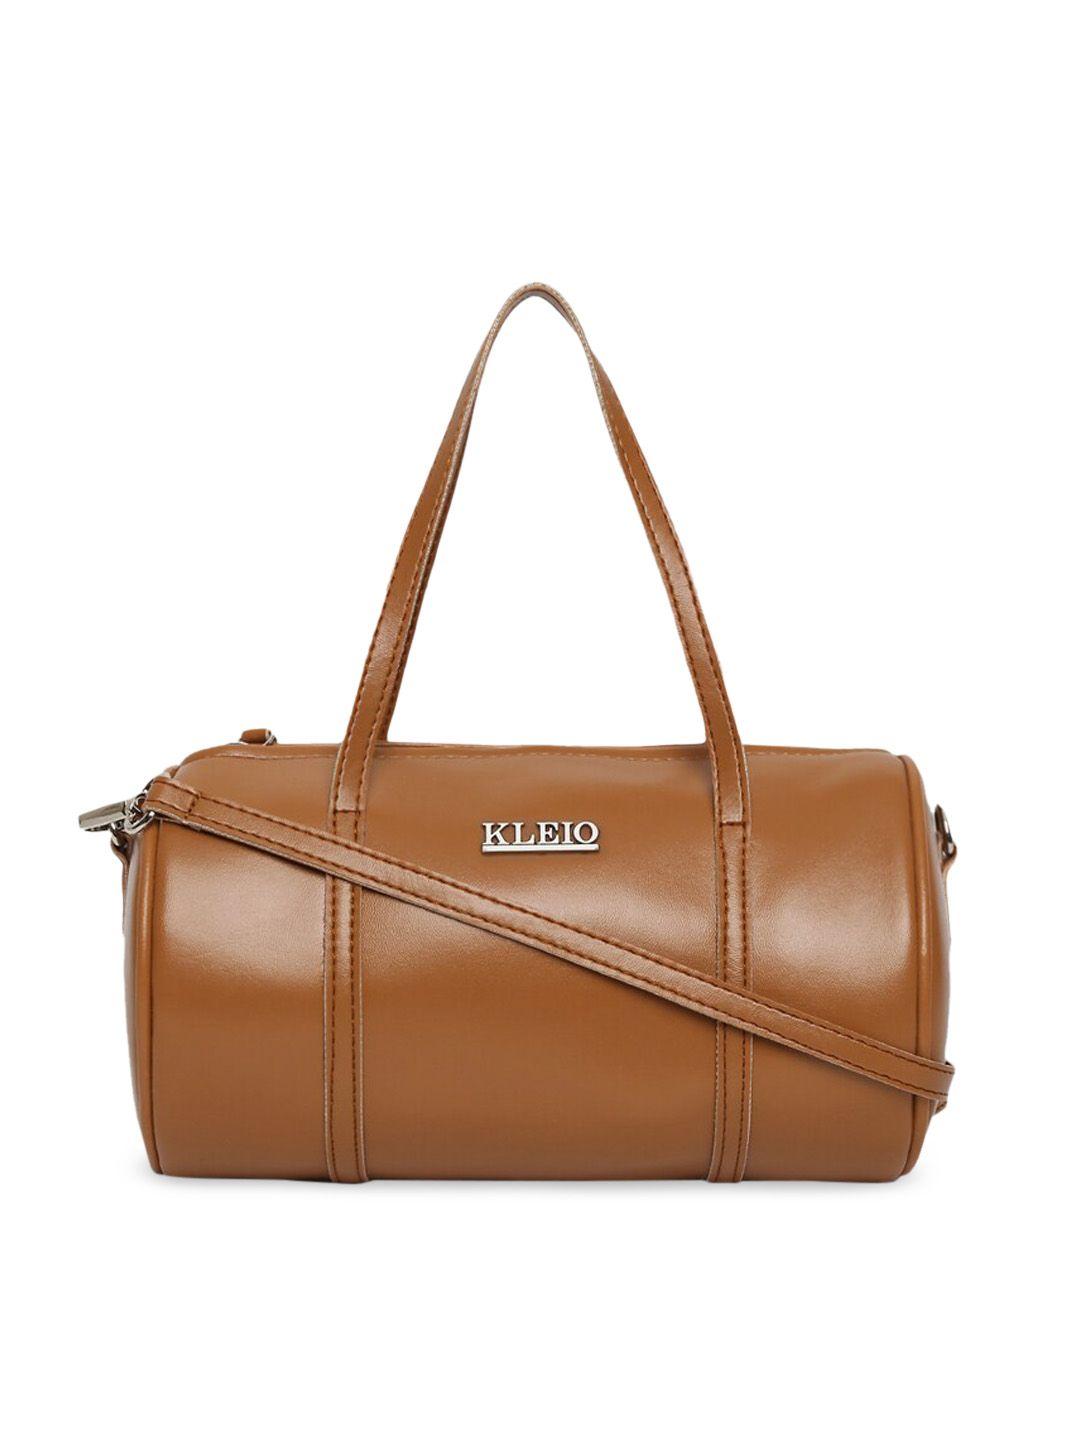 KLEIO Small Round Sling Handheld Bag